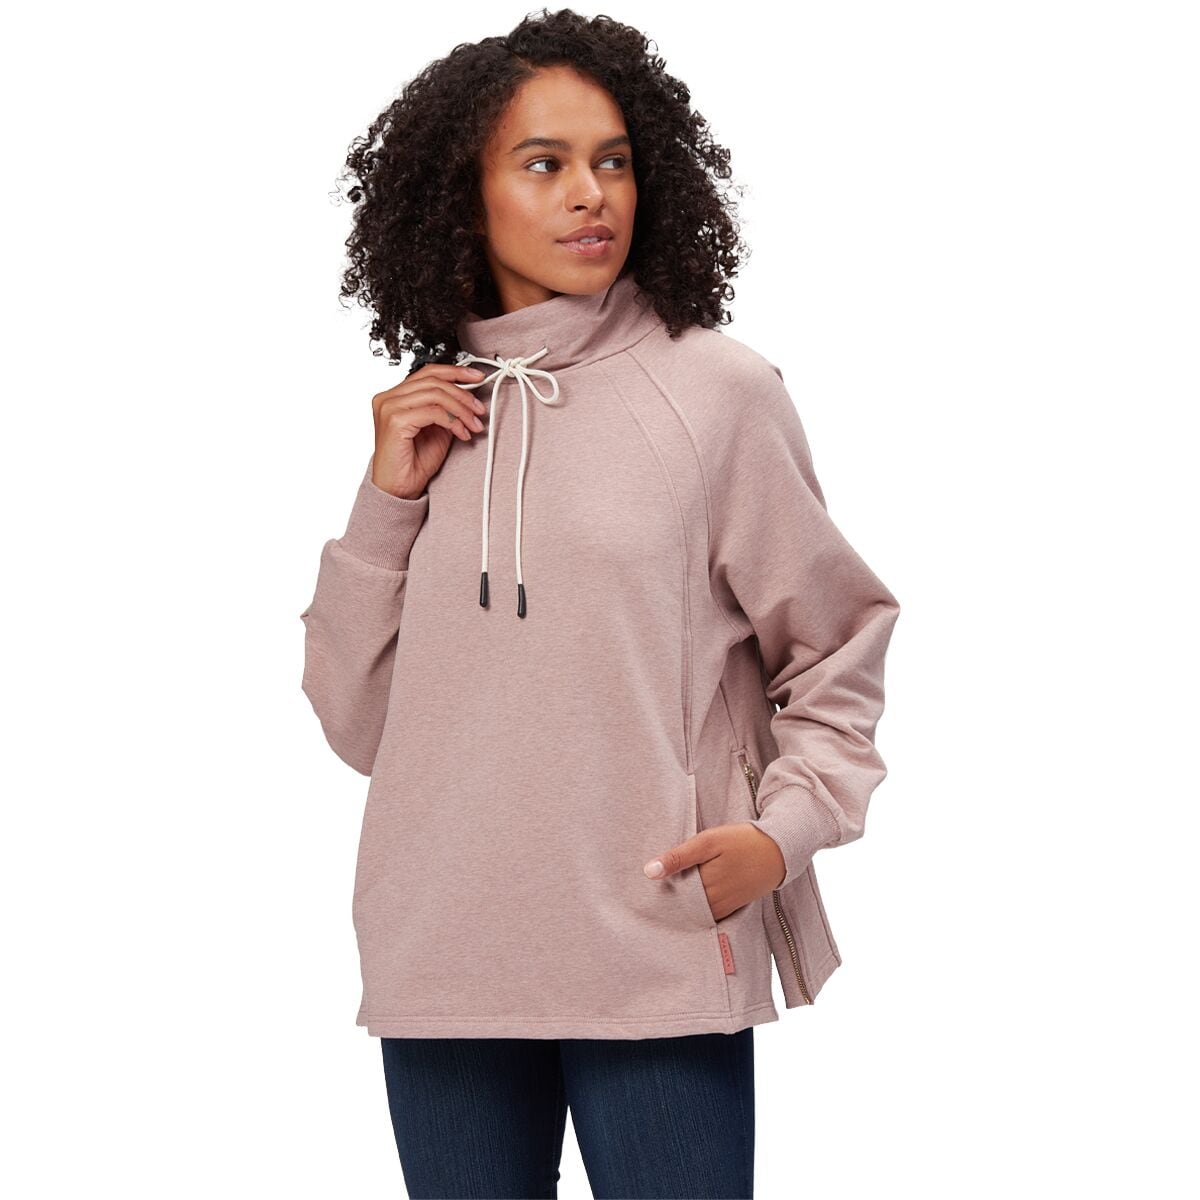 Varley Atlas Sweatshirt - Women's - Clothing